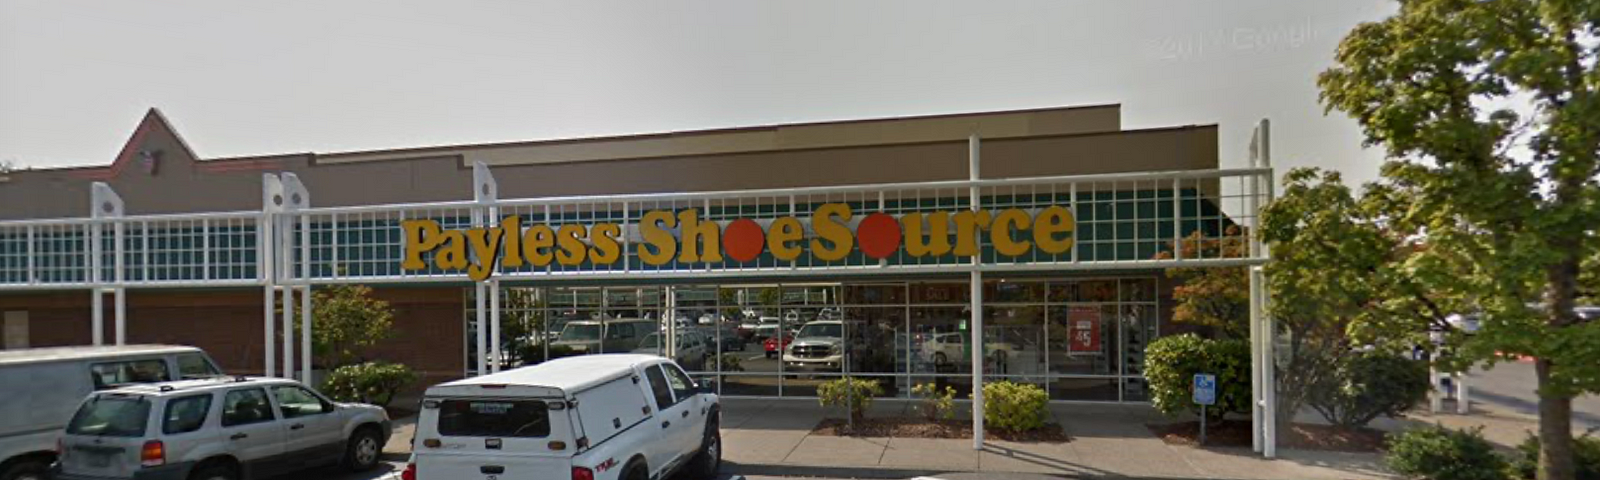 The Payless ShoeSource on South Beavercreek Road, Oregon City, Oregon